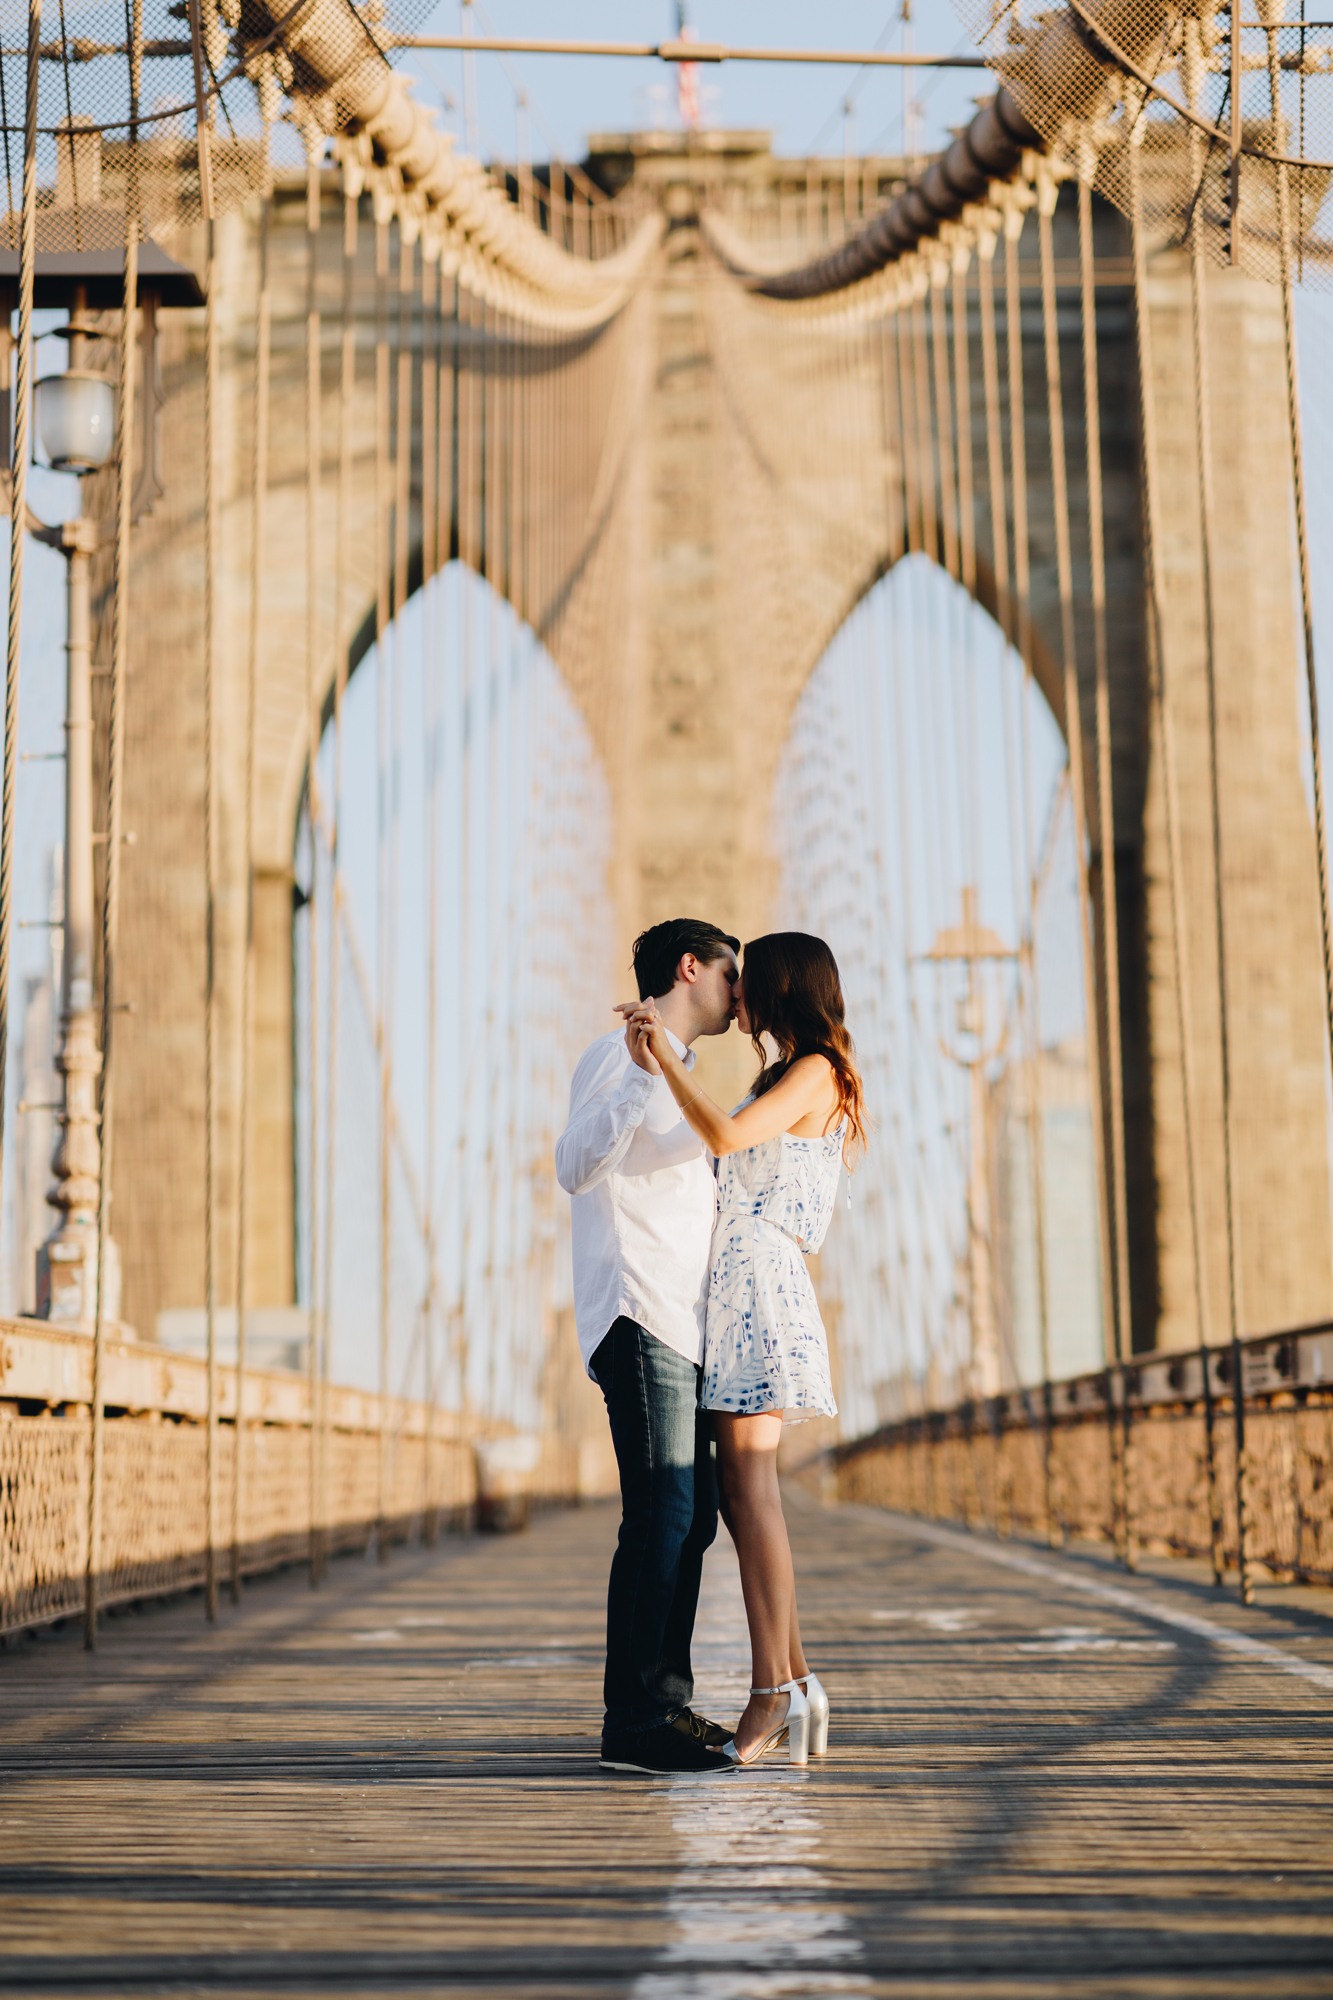 Stunning Brooklyn Bridge Engagement Photography